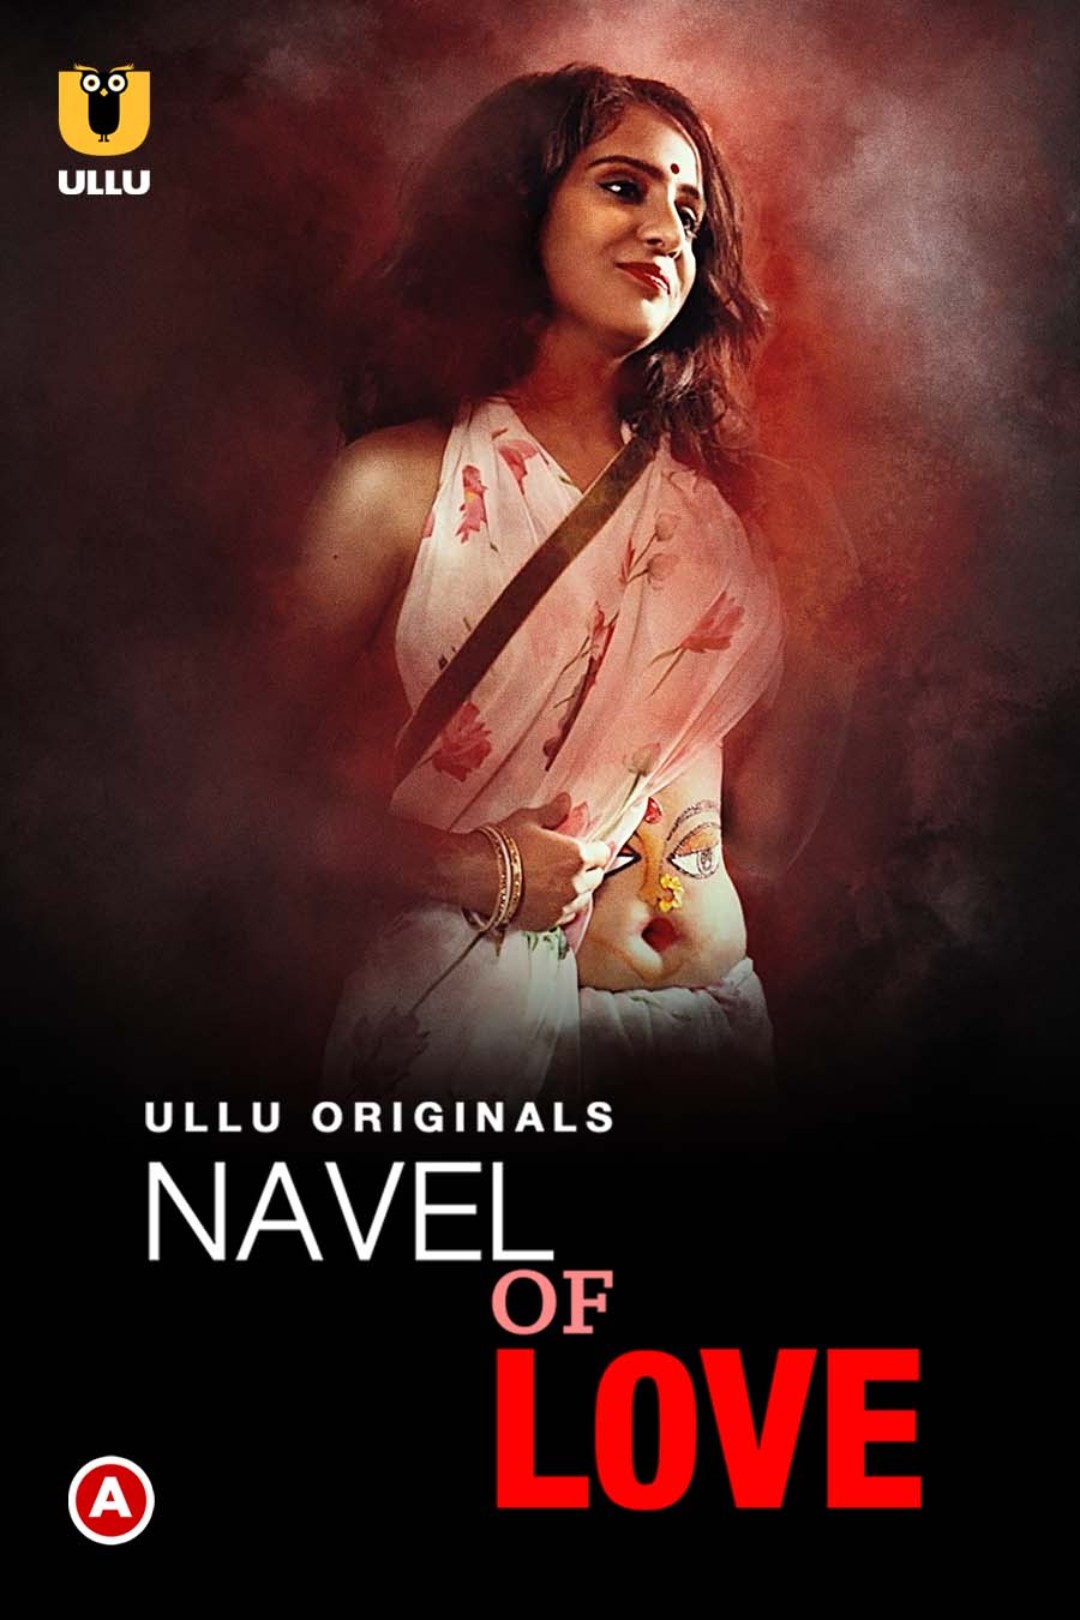 Download [18+] Navel of love (2022) S01 Ullu Originals